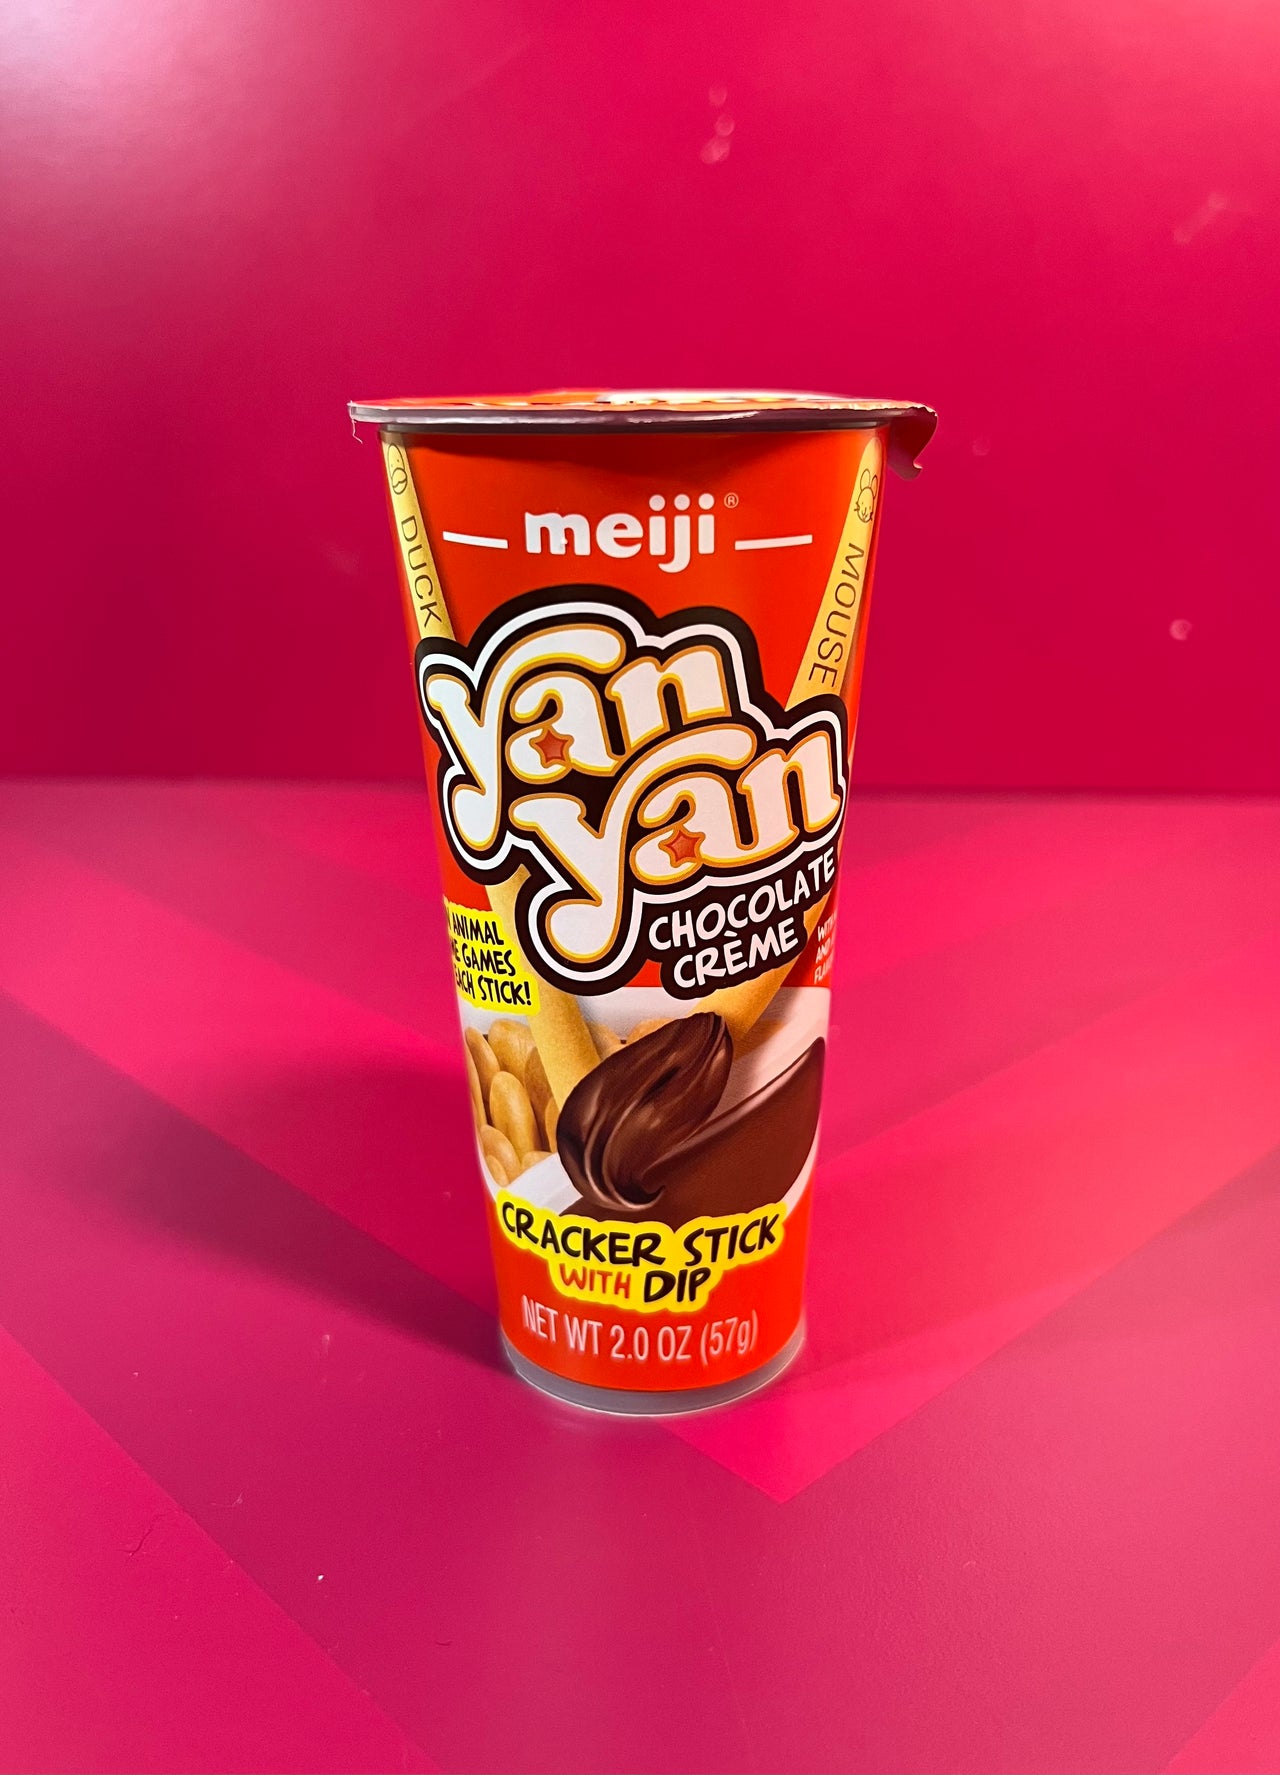 Yan Yan Chocolate Crème Cracker Sticks with Dip: A Dip-Tastic Delight!